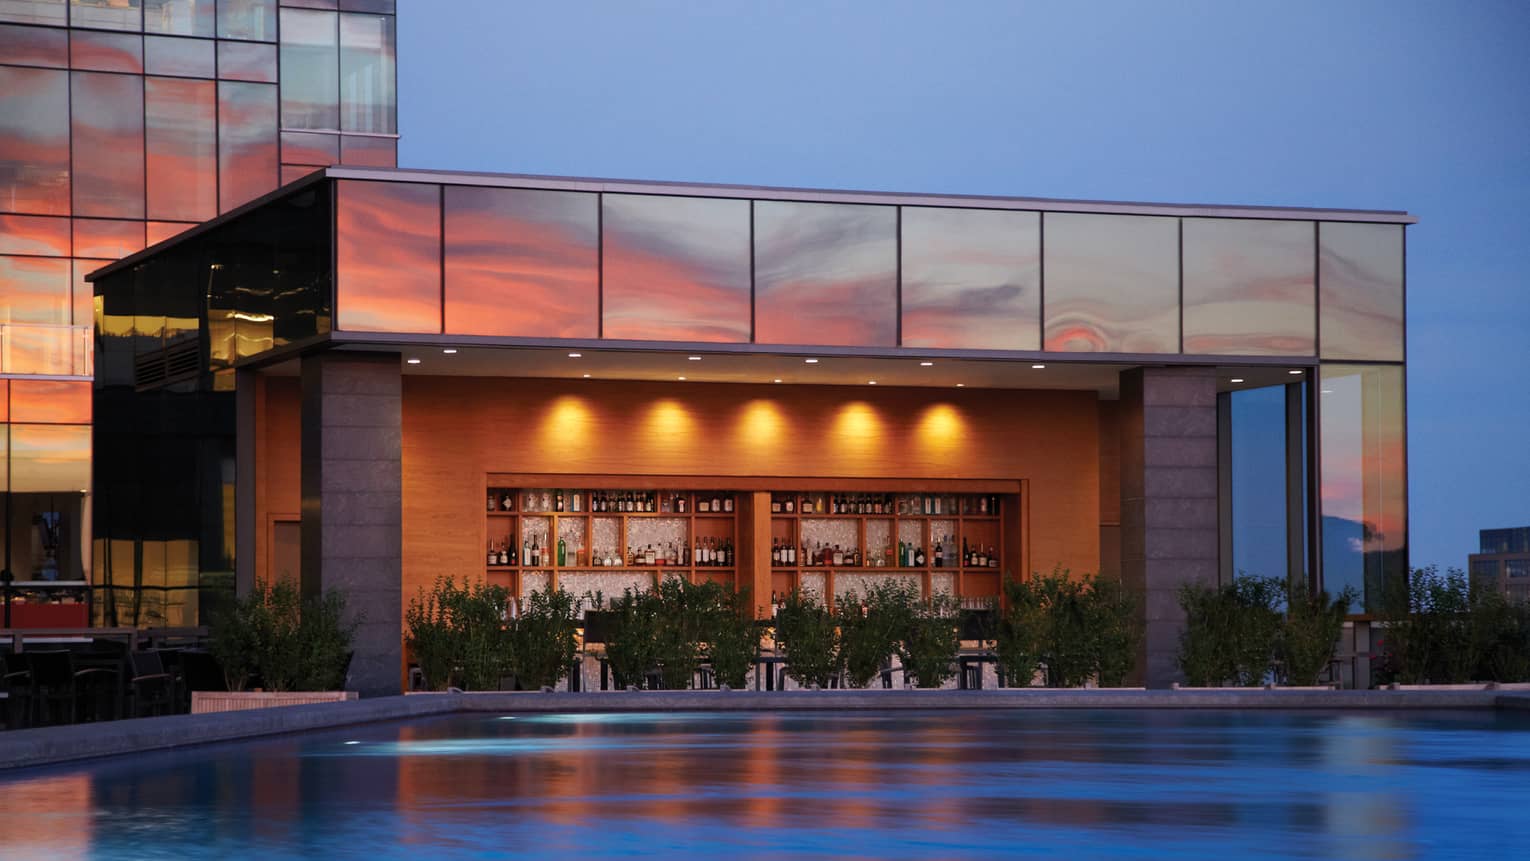 Illuminated swimming pool, wood bar and liquor displays under glass building exterior at sunset